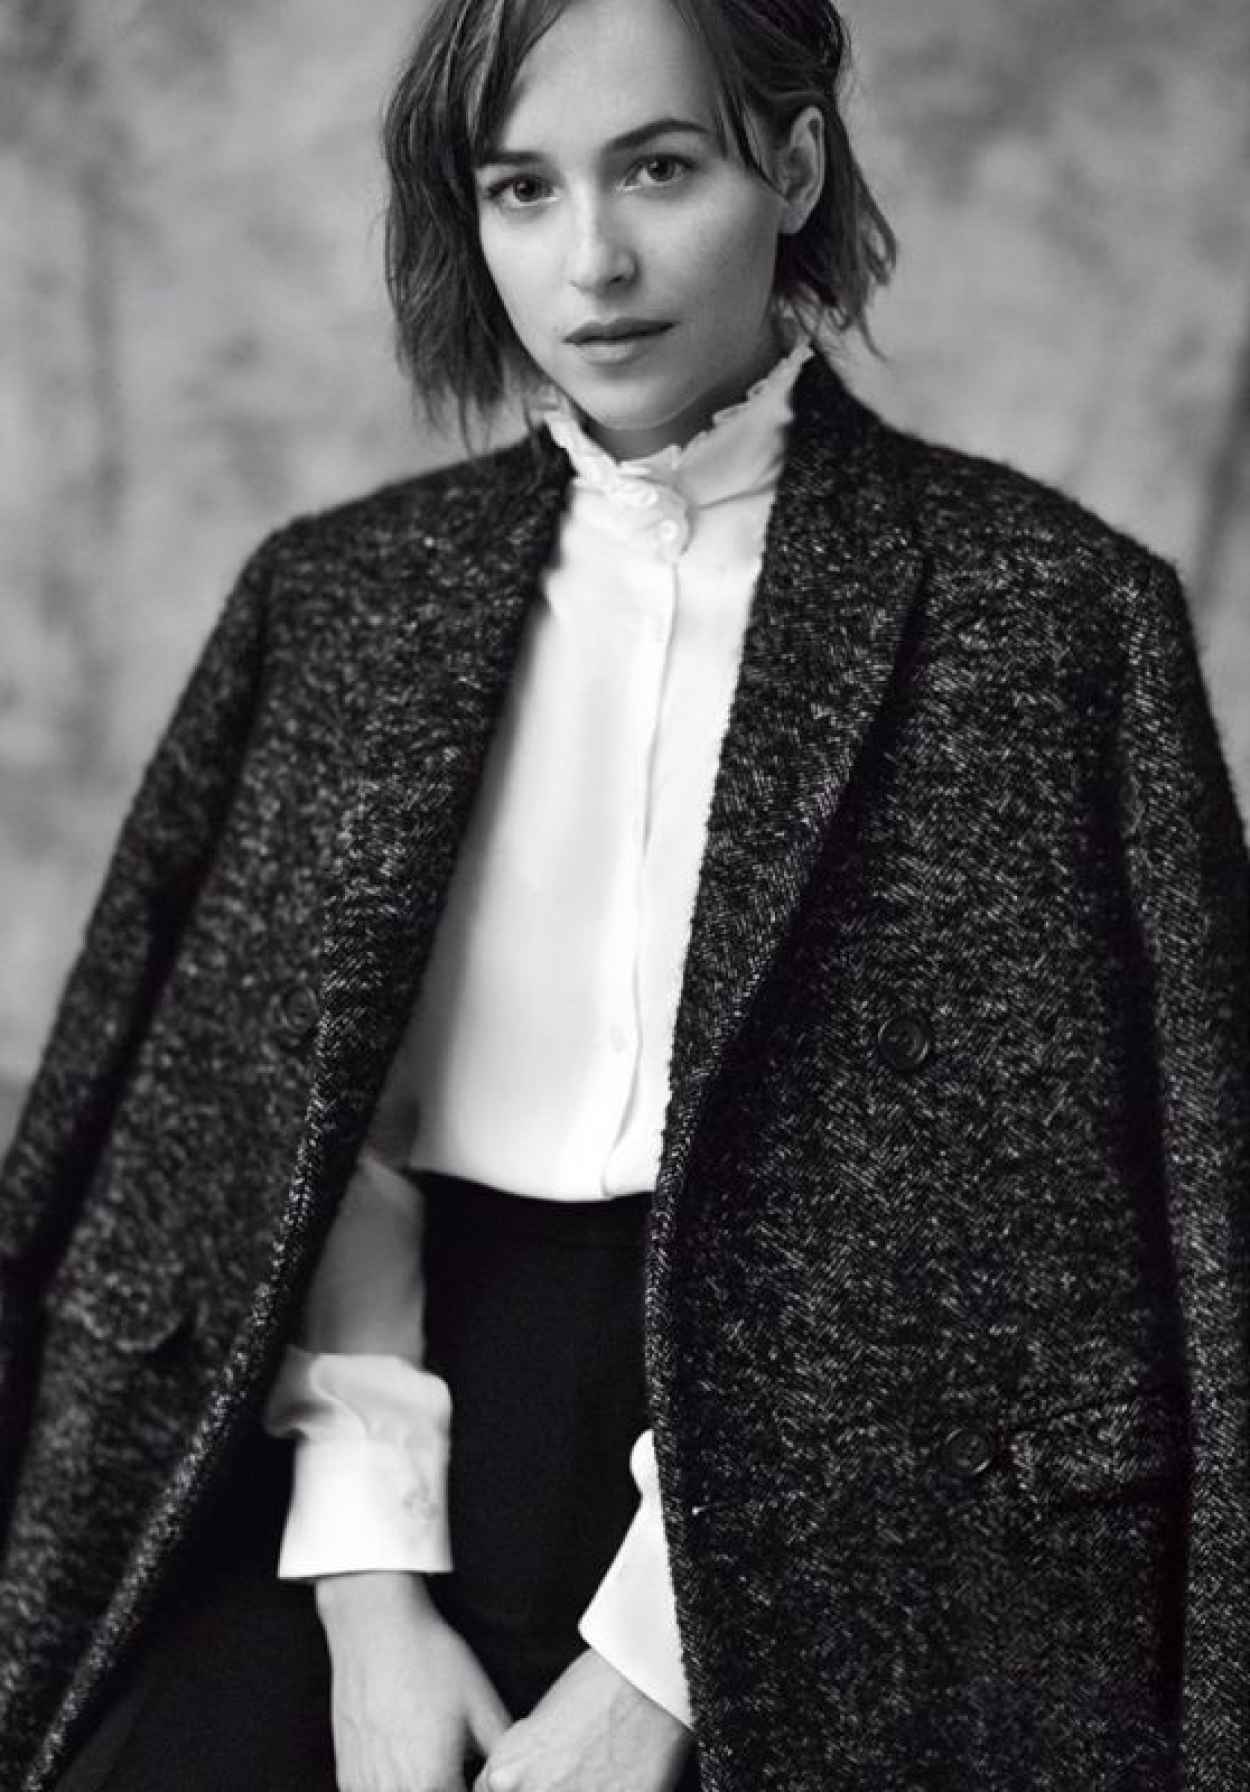 Dakota Johnson Photoshoot For Luomo Vogue September 2015